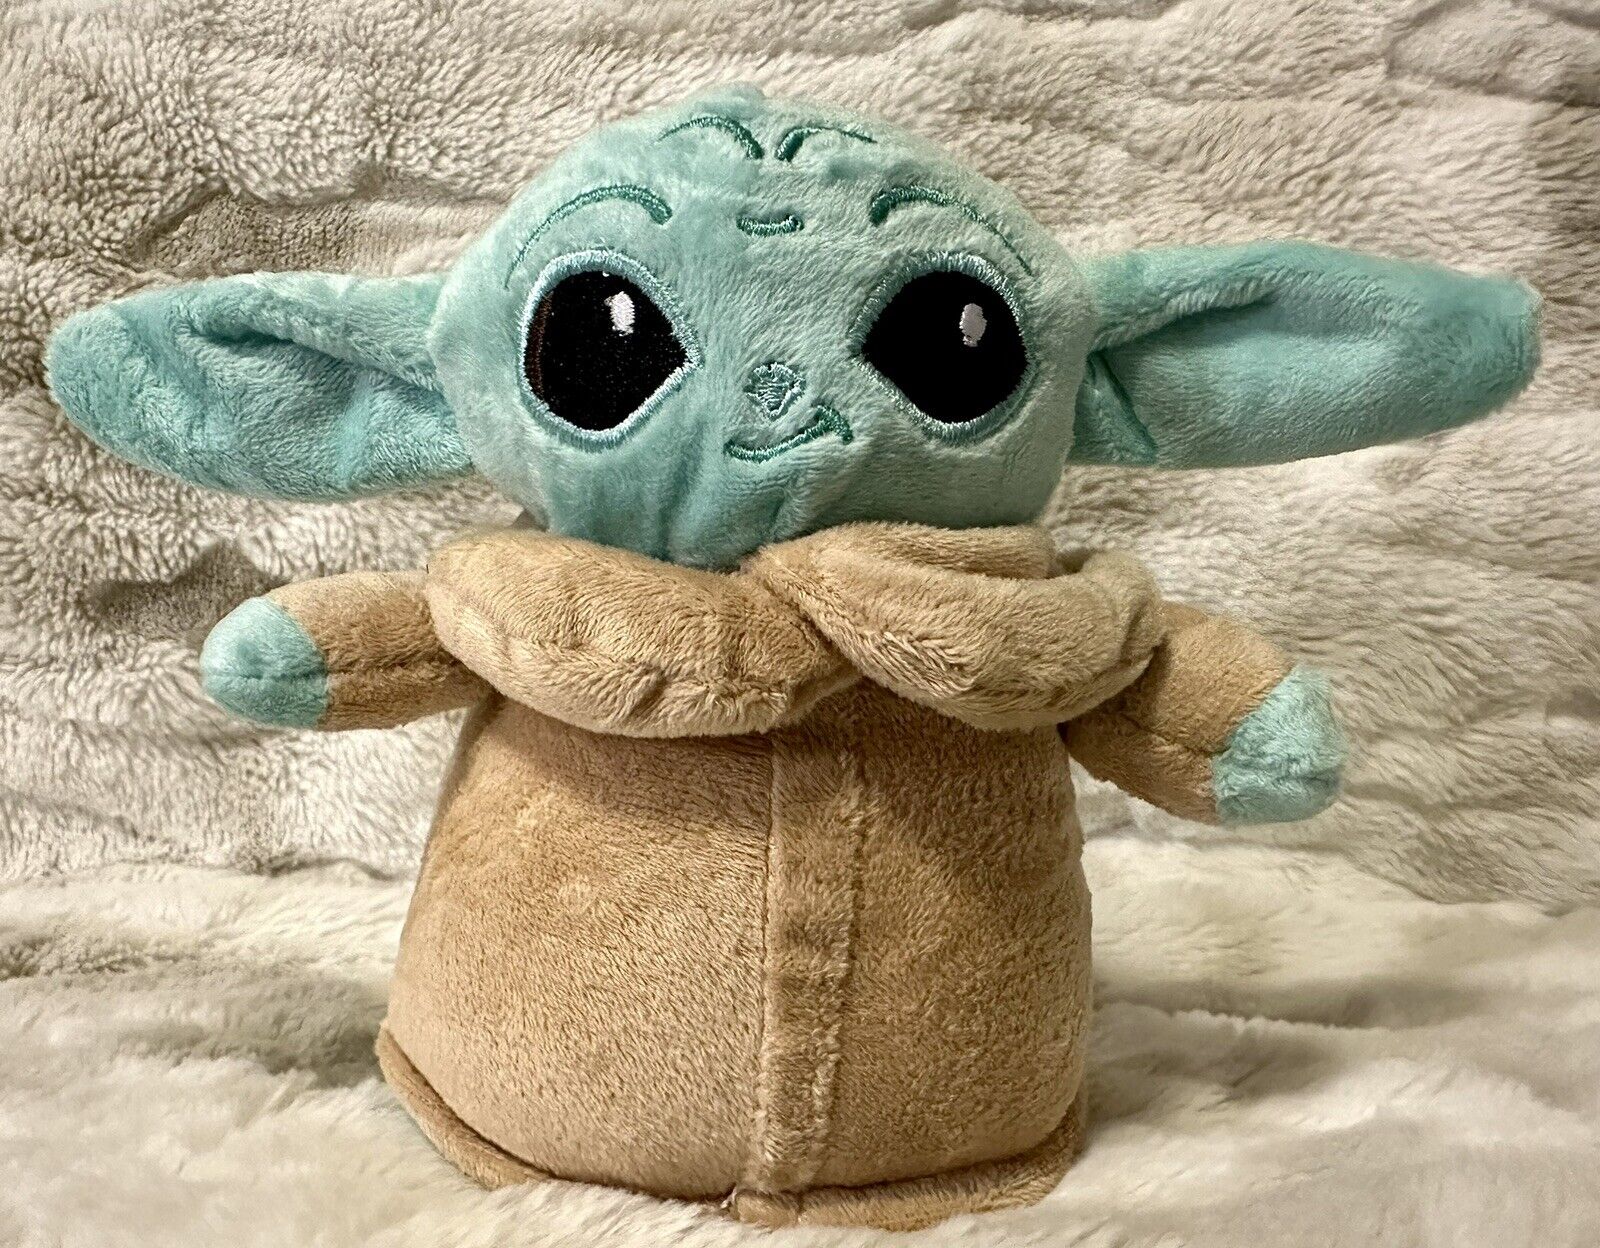 Baby Yoda Small Plush Star Wars Toy